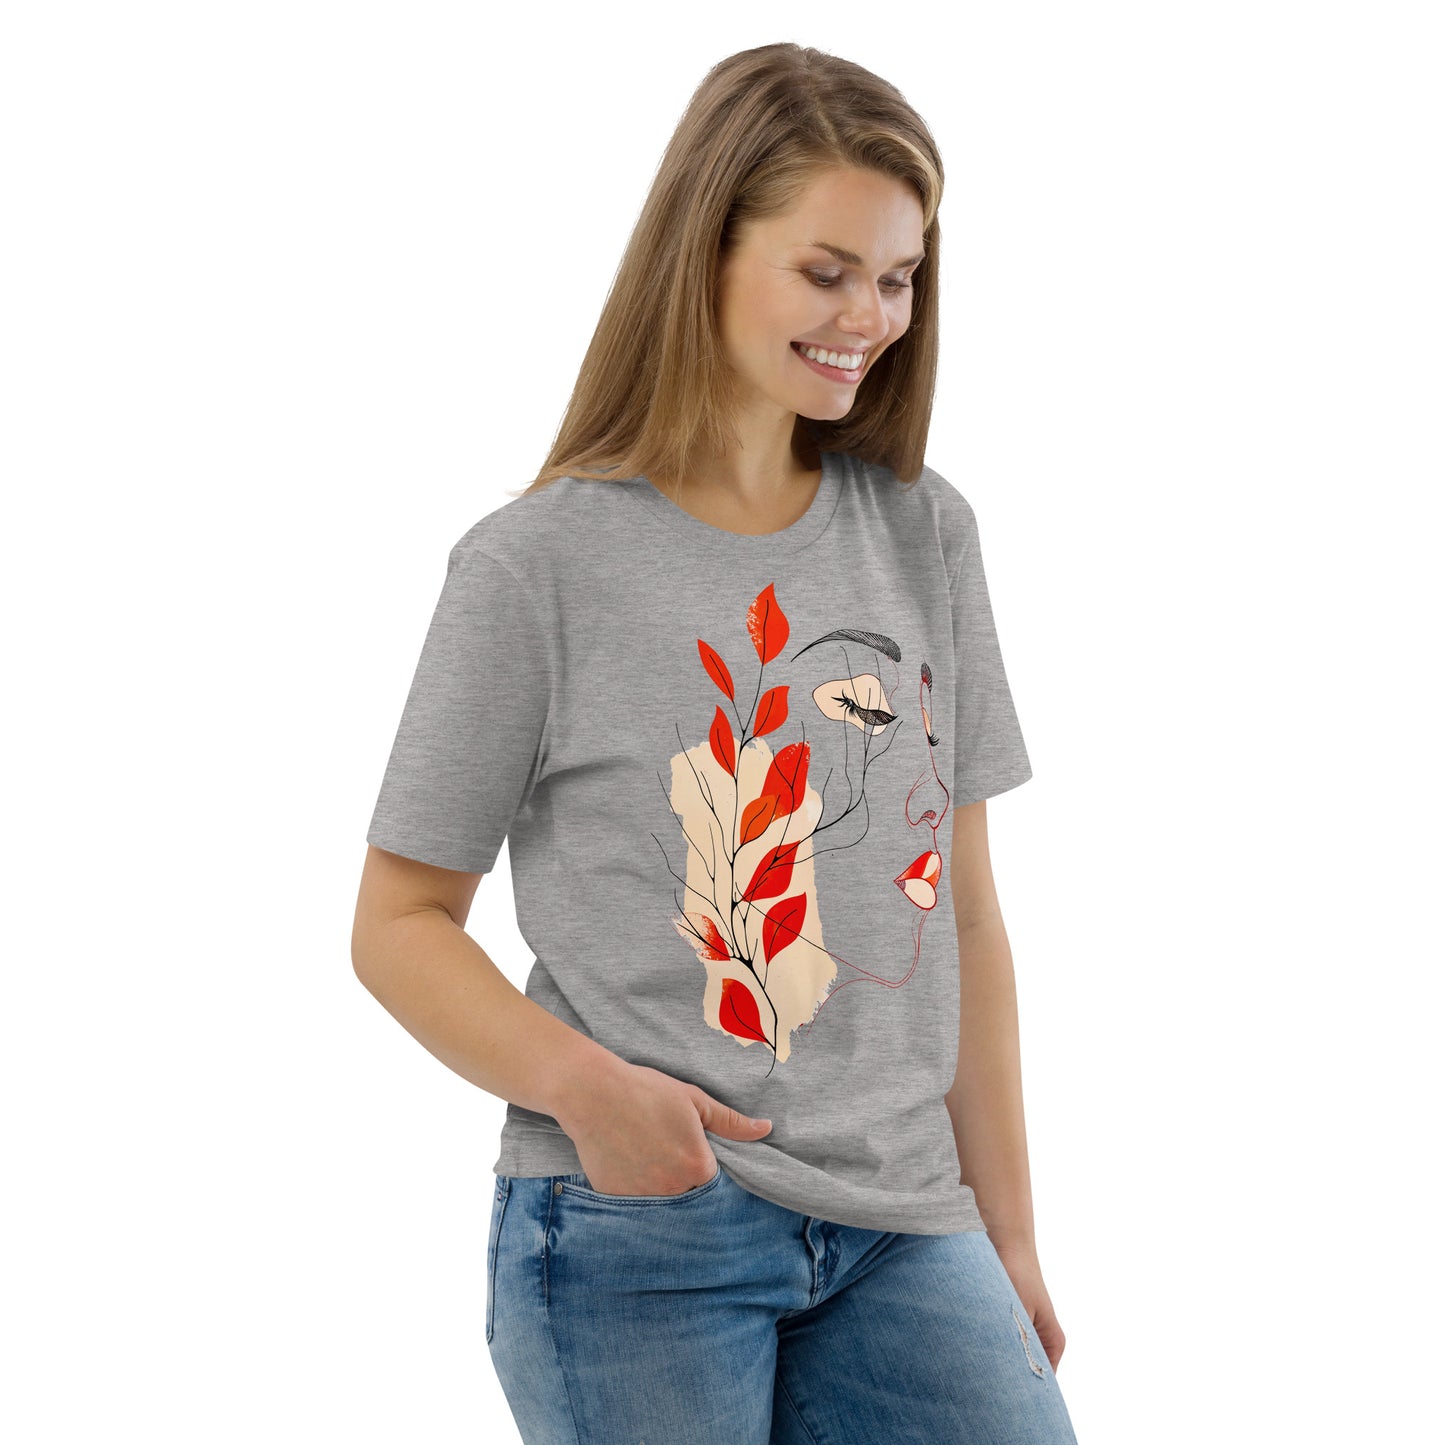 Women's T-shirt, Organic Cotton T-shirt, Custom Made, Eco-Friendly Tee